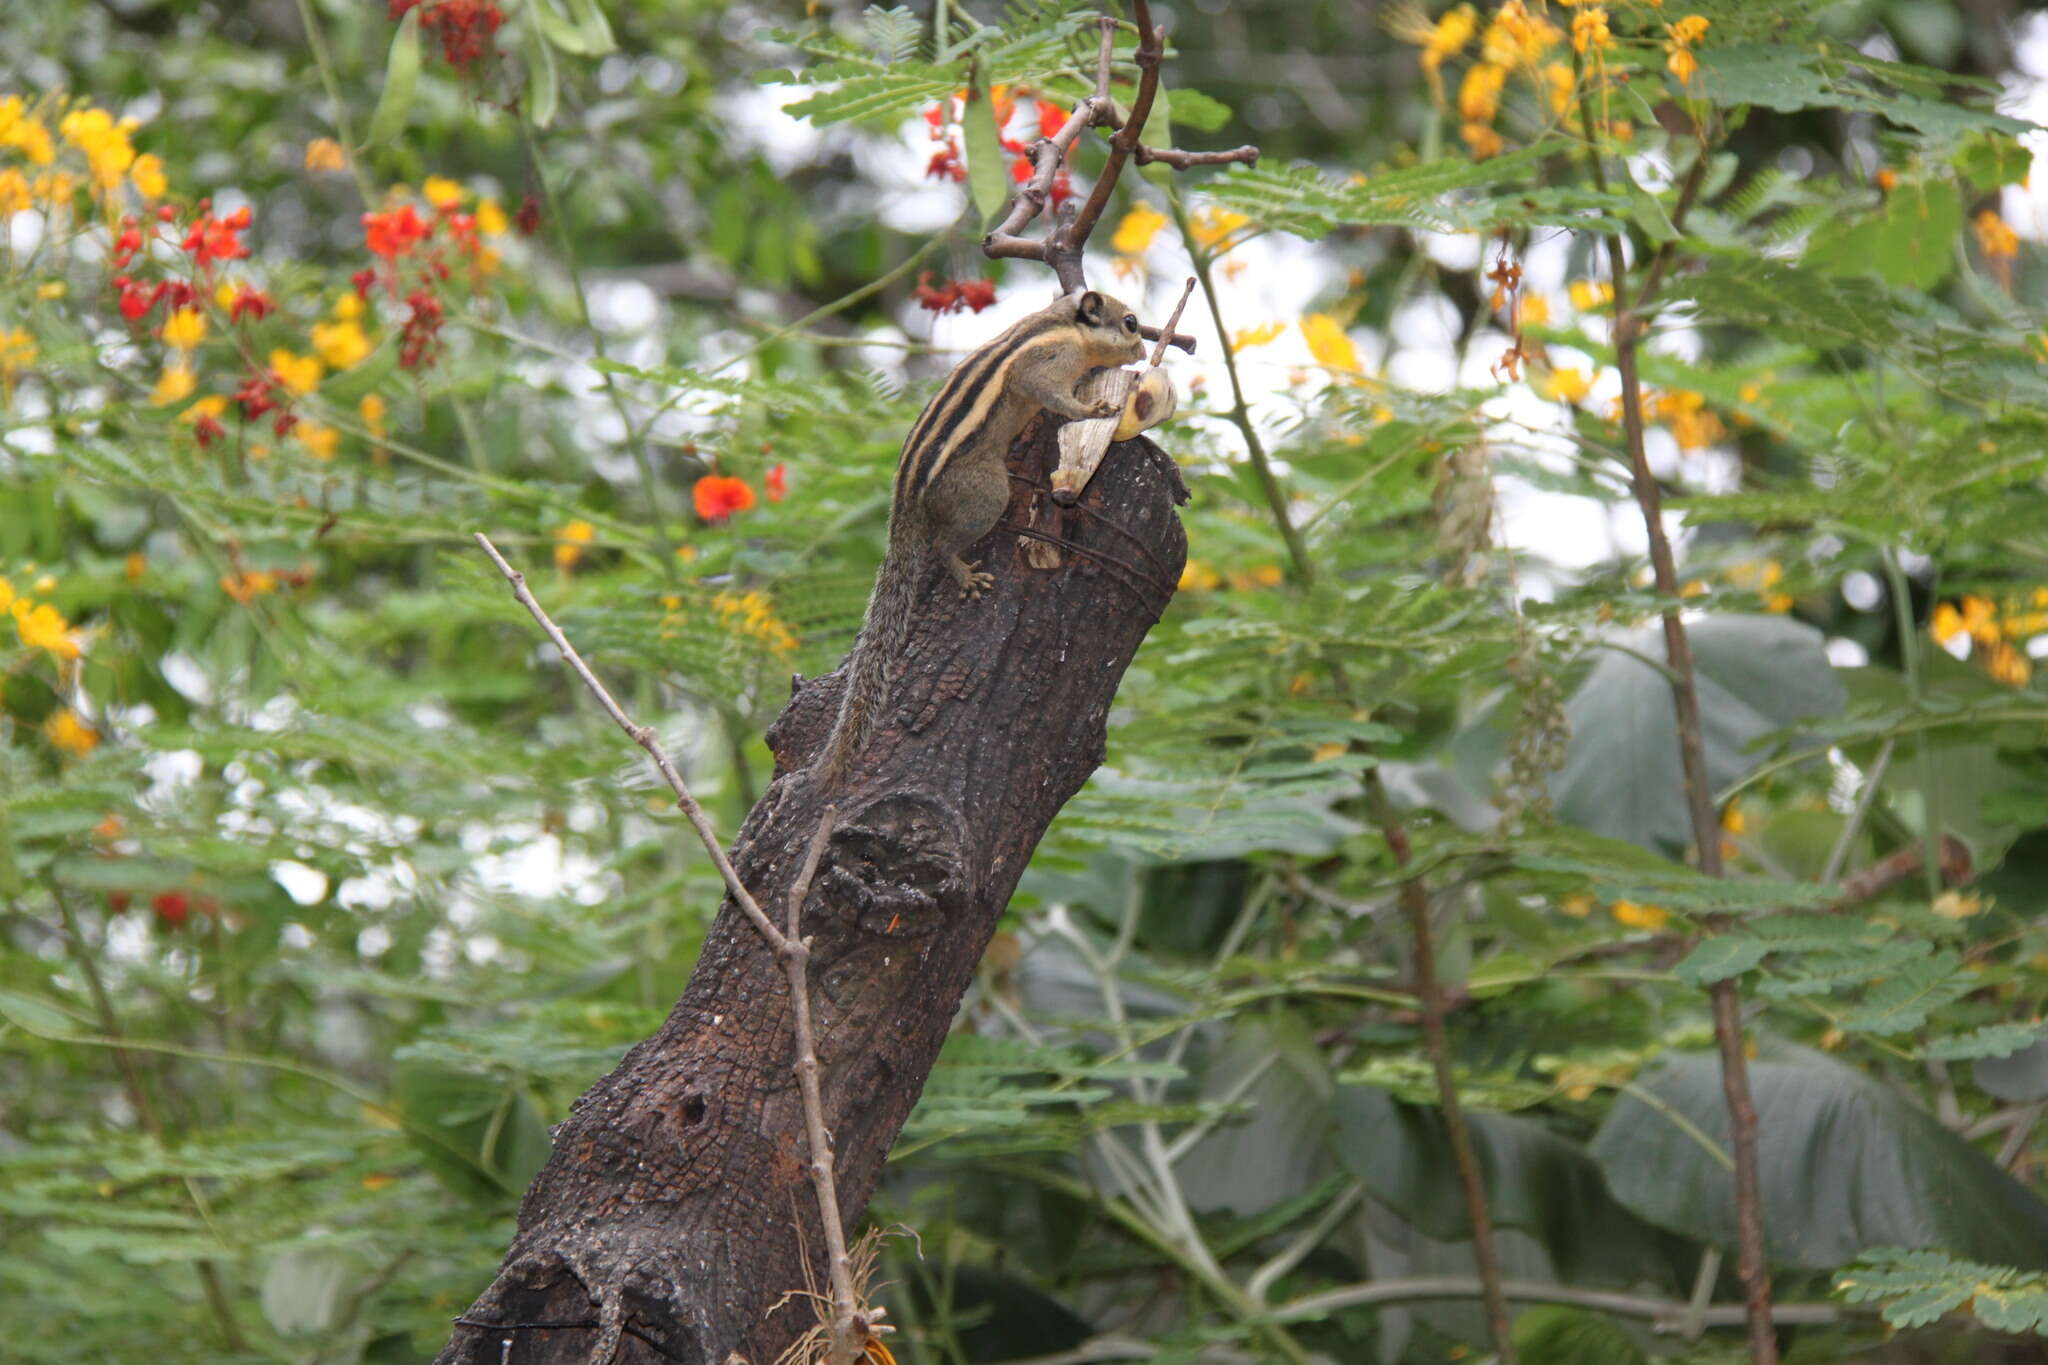 Image of Himalayan Striped Squirrel